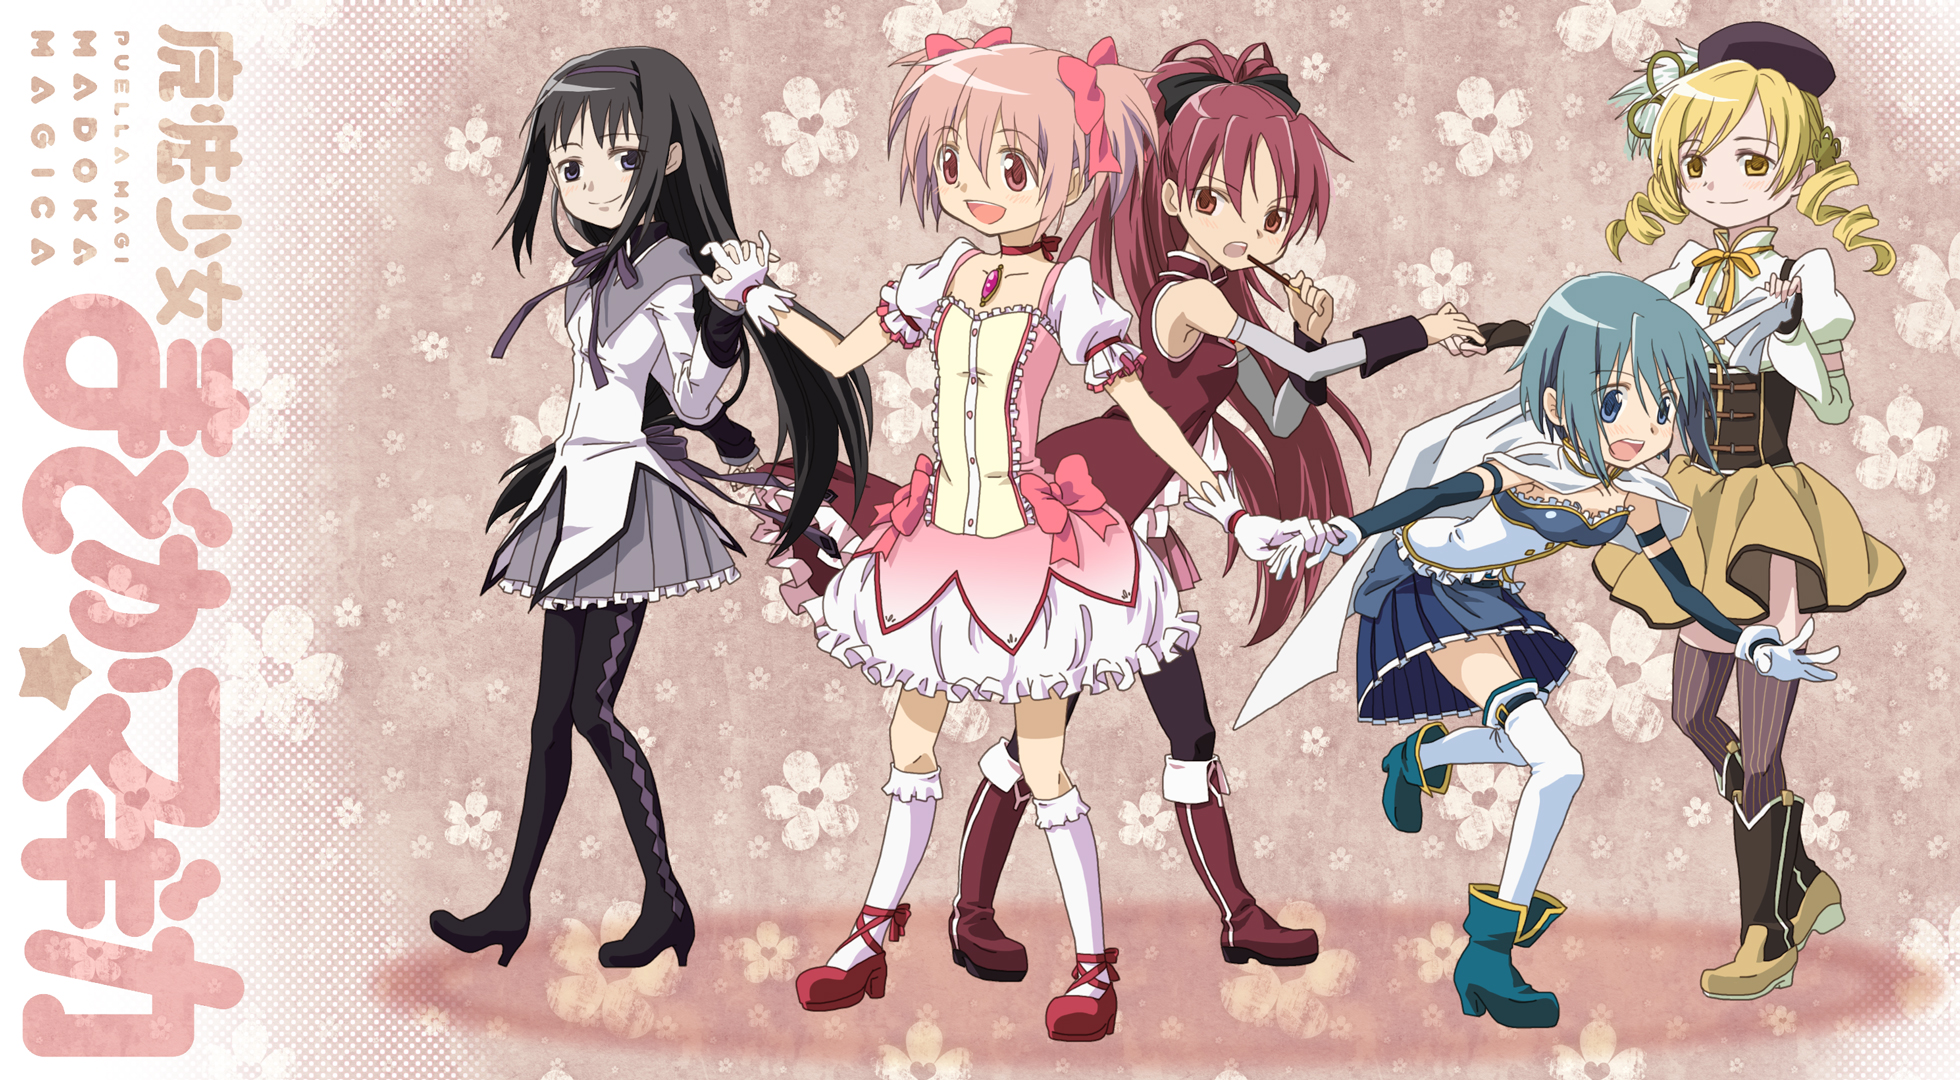 Mahou Shoujo Madoka Magica, Miki Sayaka, Sakura Kyouko, Tomoe Mami, Kaname Madoka, anime, Akemi Homura, anime girls - desktop wallpaper